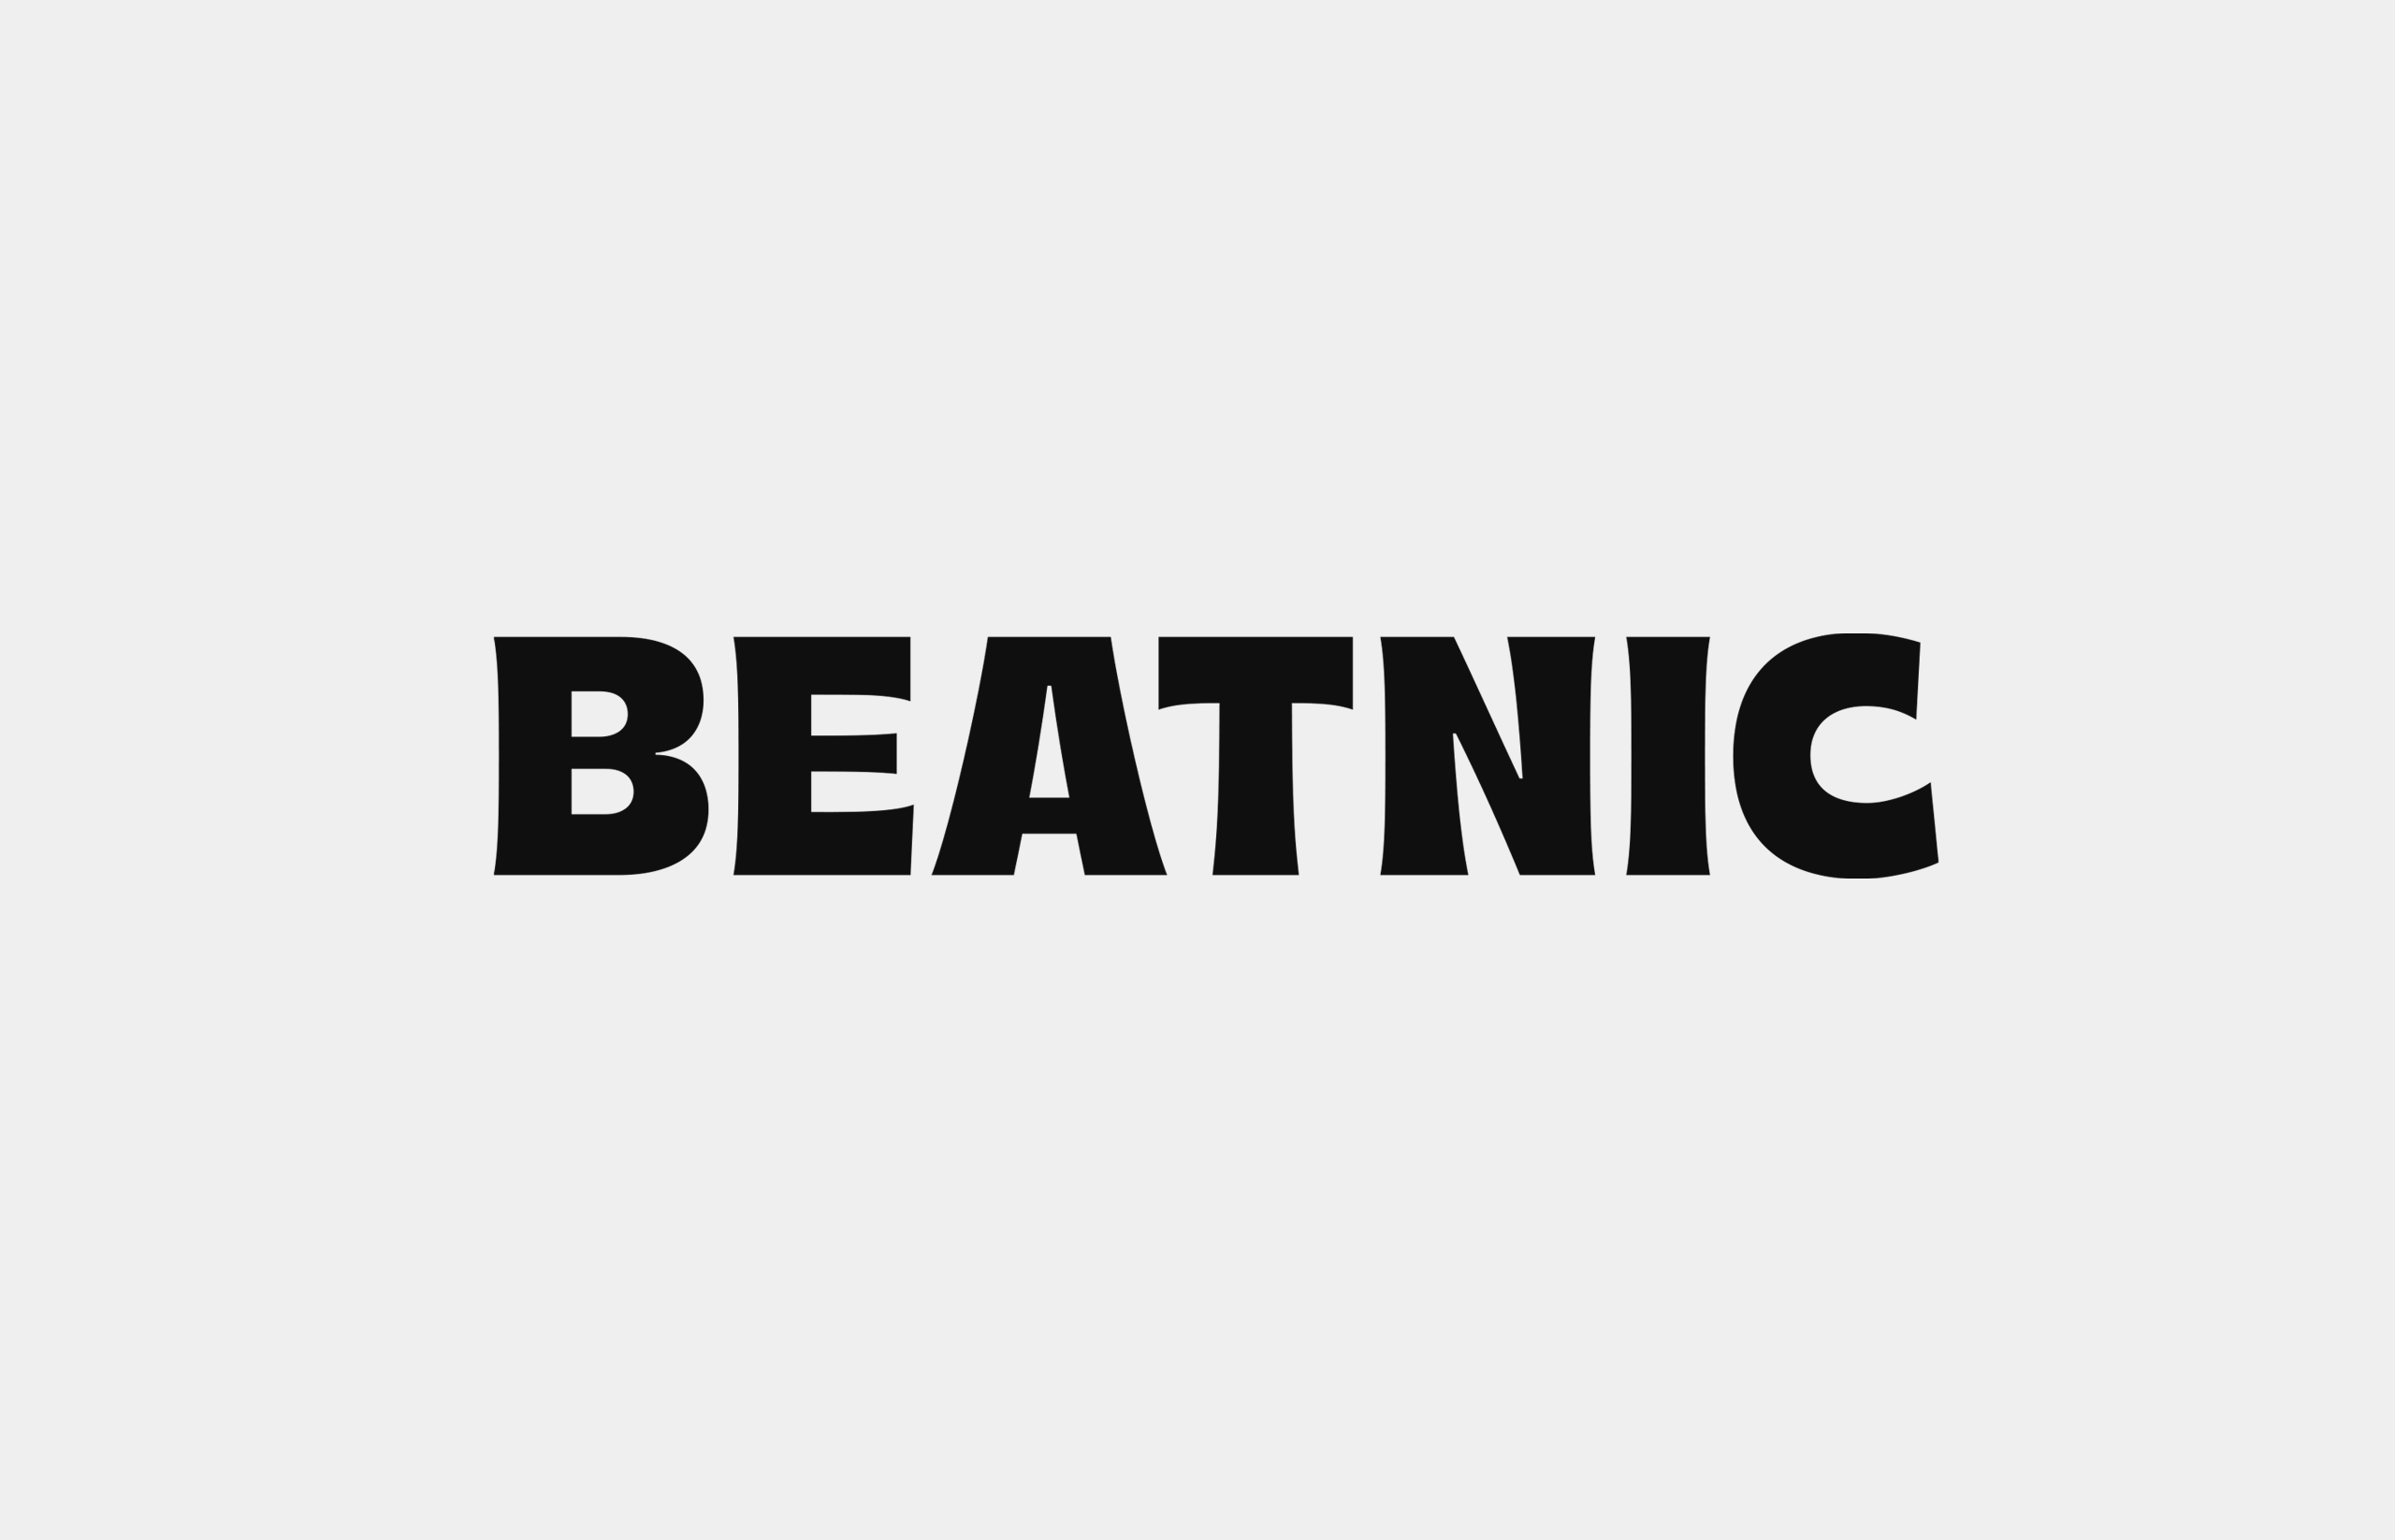 Beatnic wordmark (art direction by Pearlfisher) –